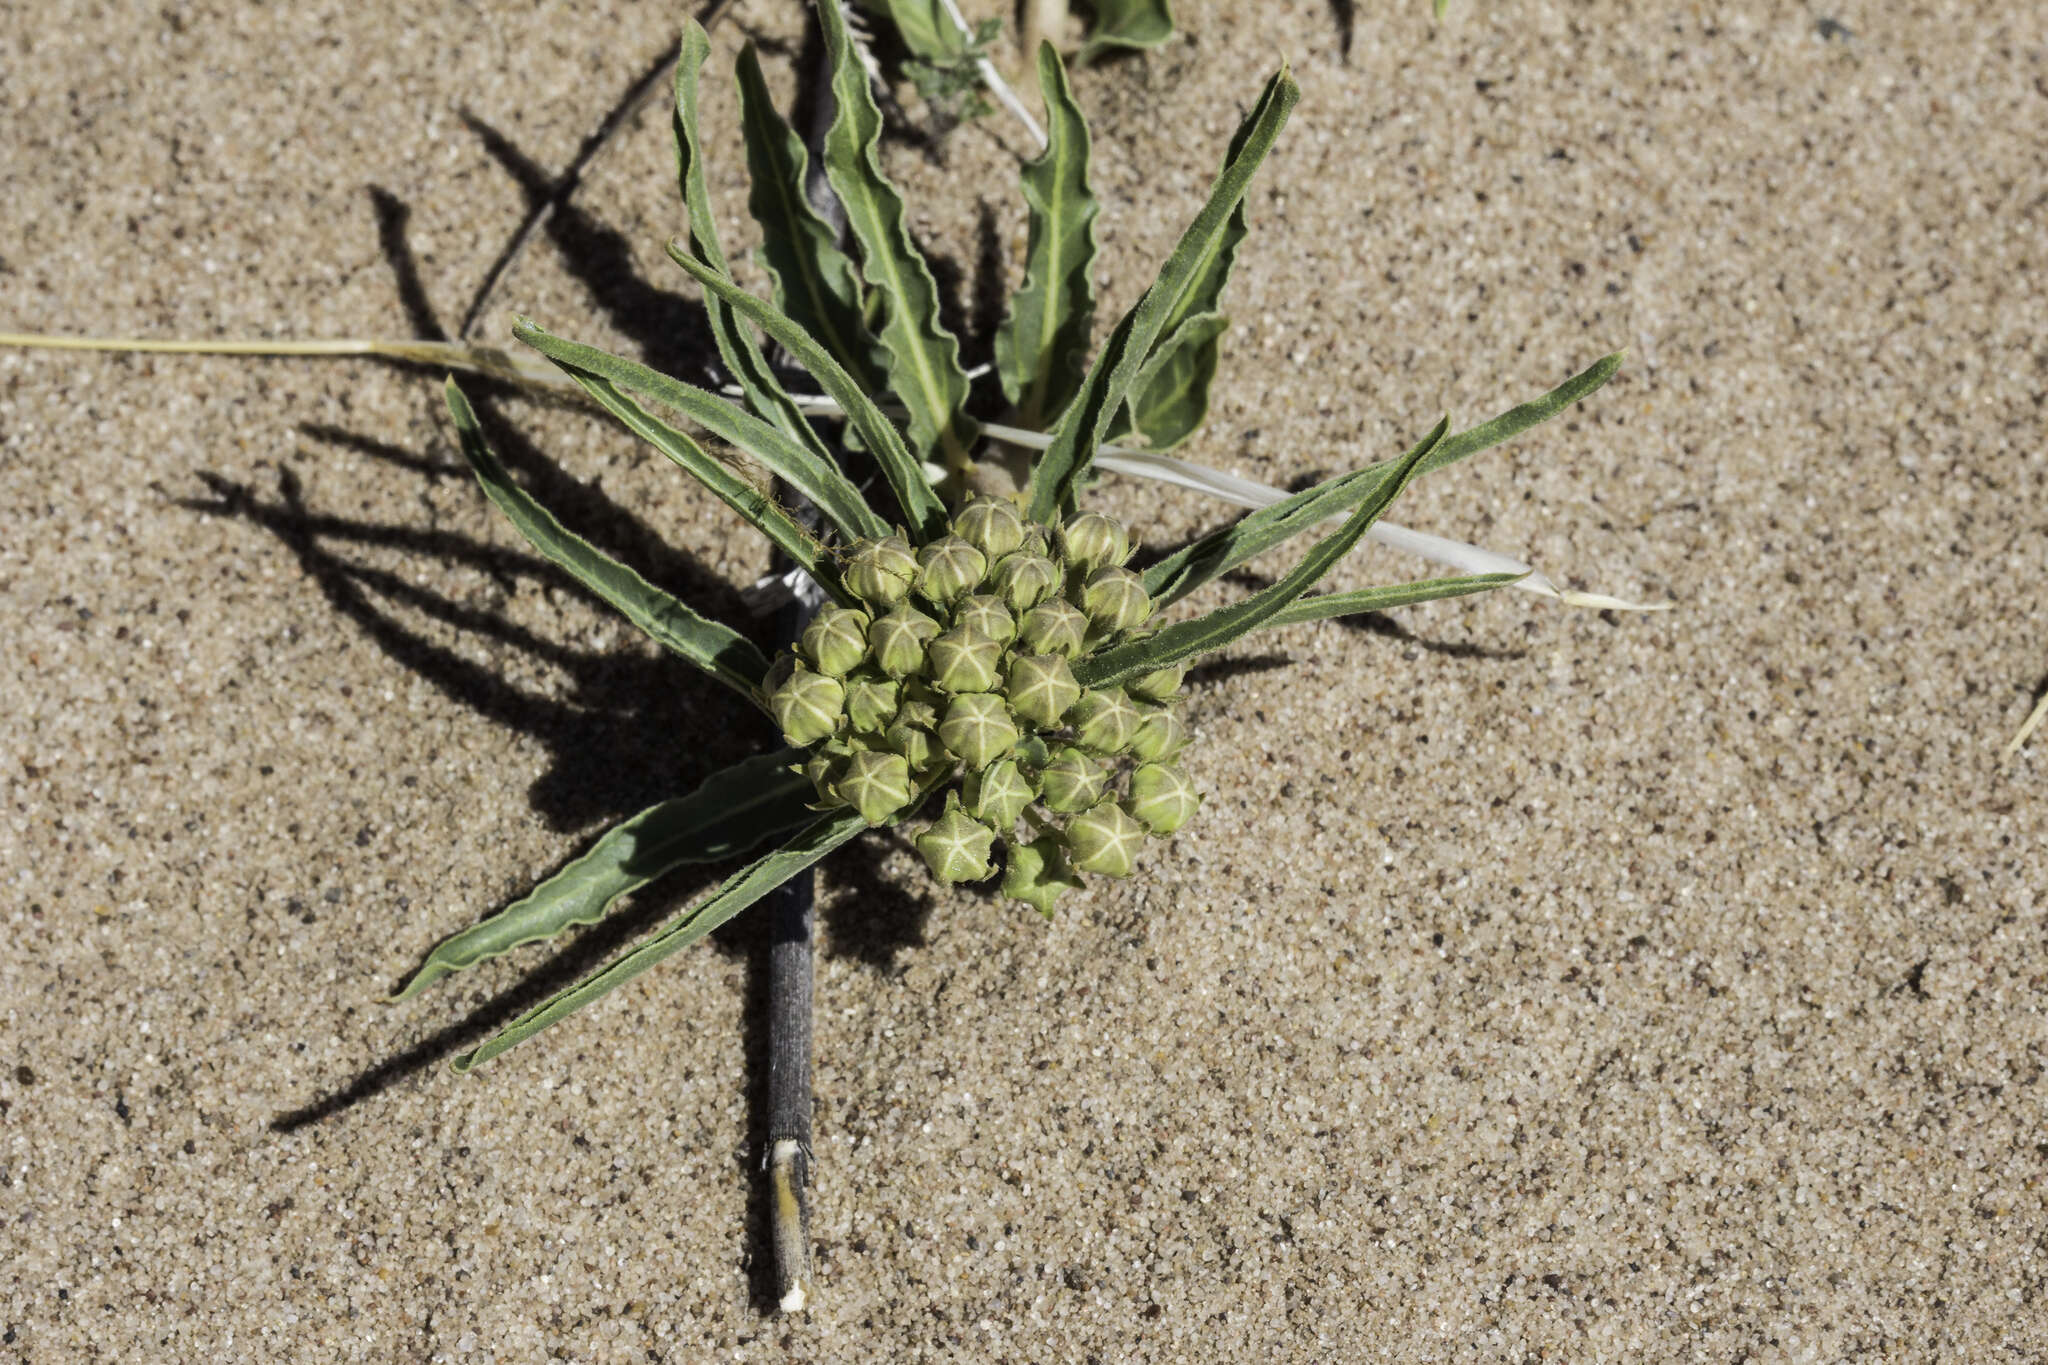 Image of dwarf milkweed